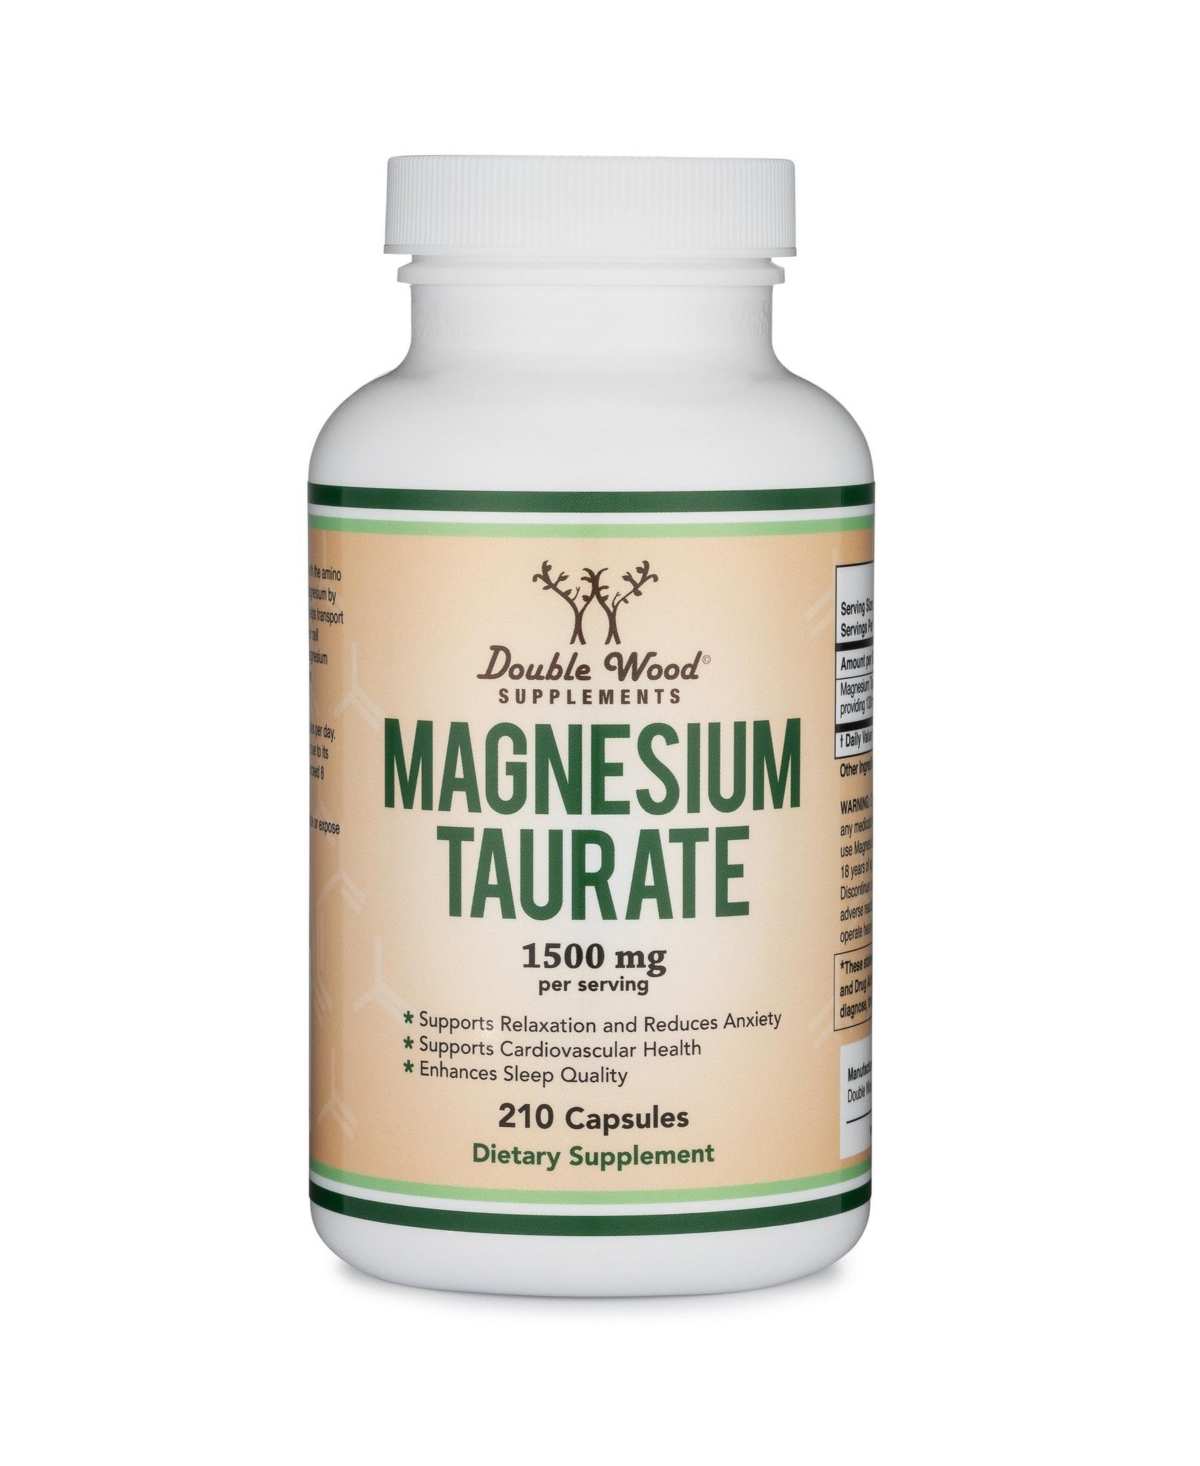 Magnesium Taurate - 210 capsules, 1500 mg servings